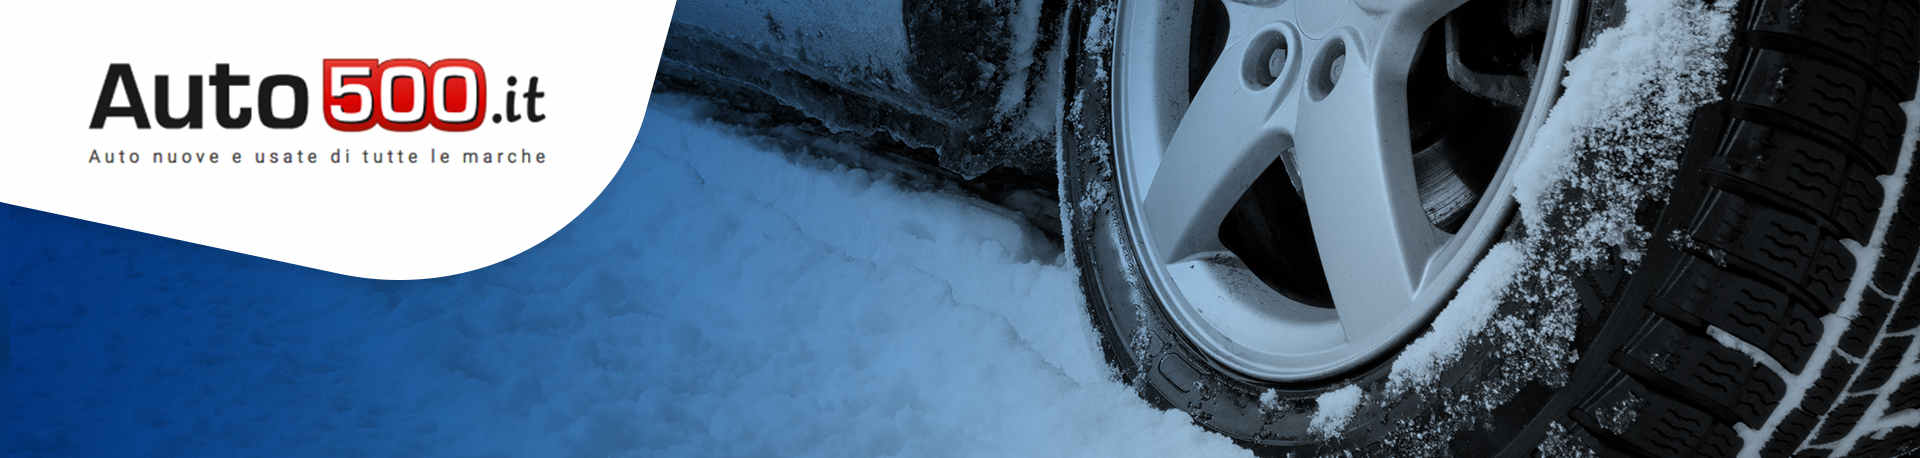 Durata pneumatici invernali auto